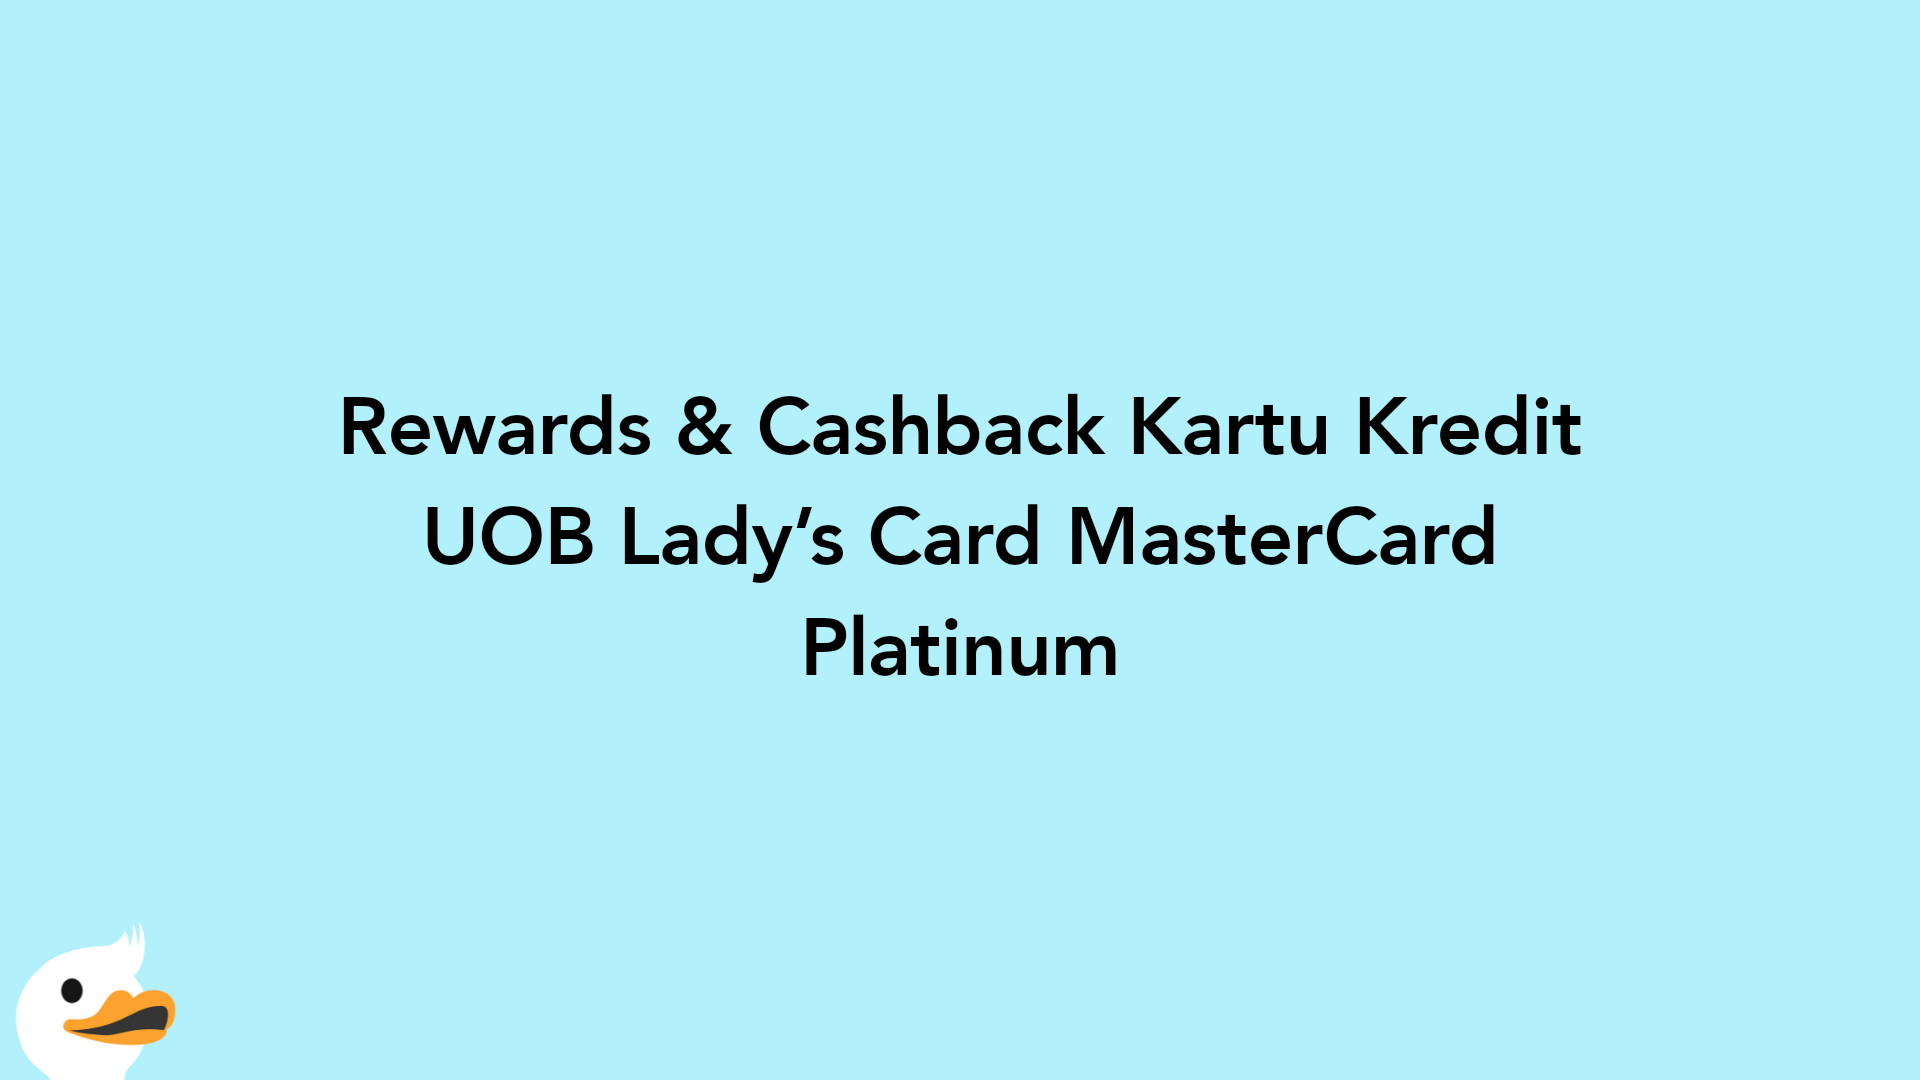 Rewards & Cashback Kartu Kredit UOB Lady’s Card MasterCard Platinum